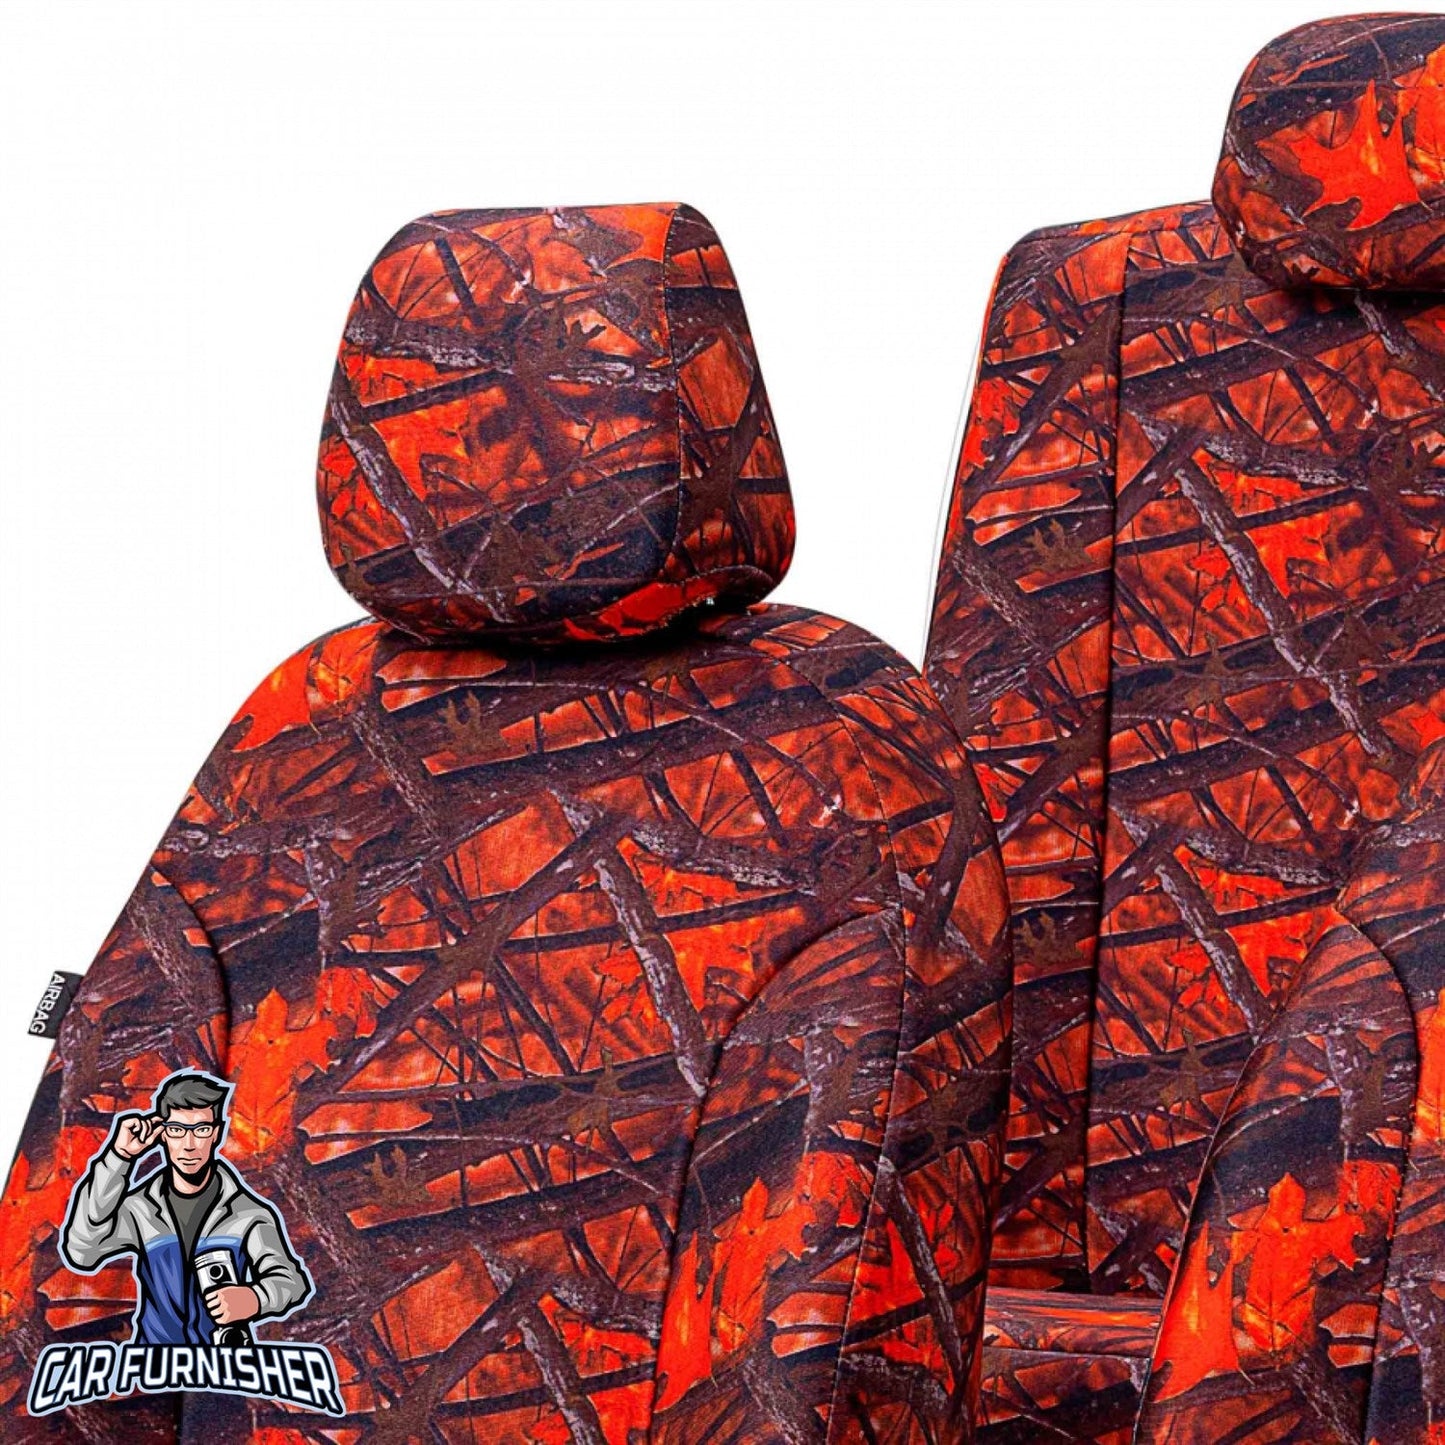 Kia XCeed Seat Covers Camouflage Waterproof Design Sahara Camo Waterproof Fabric